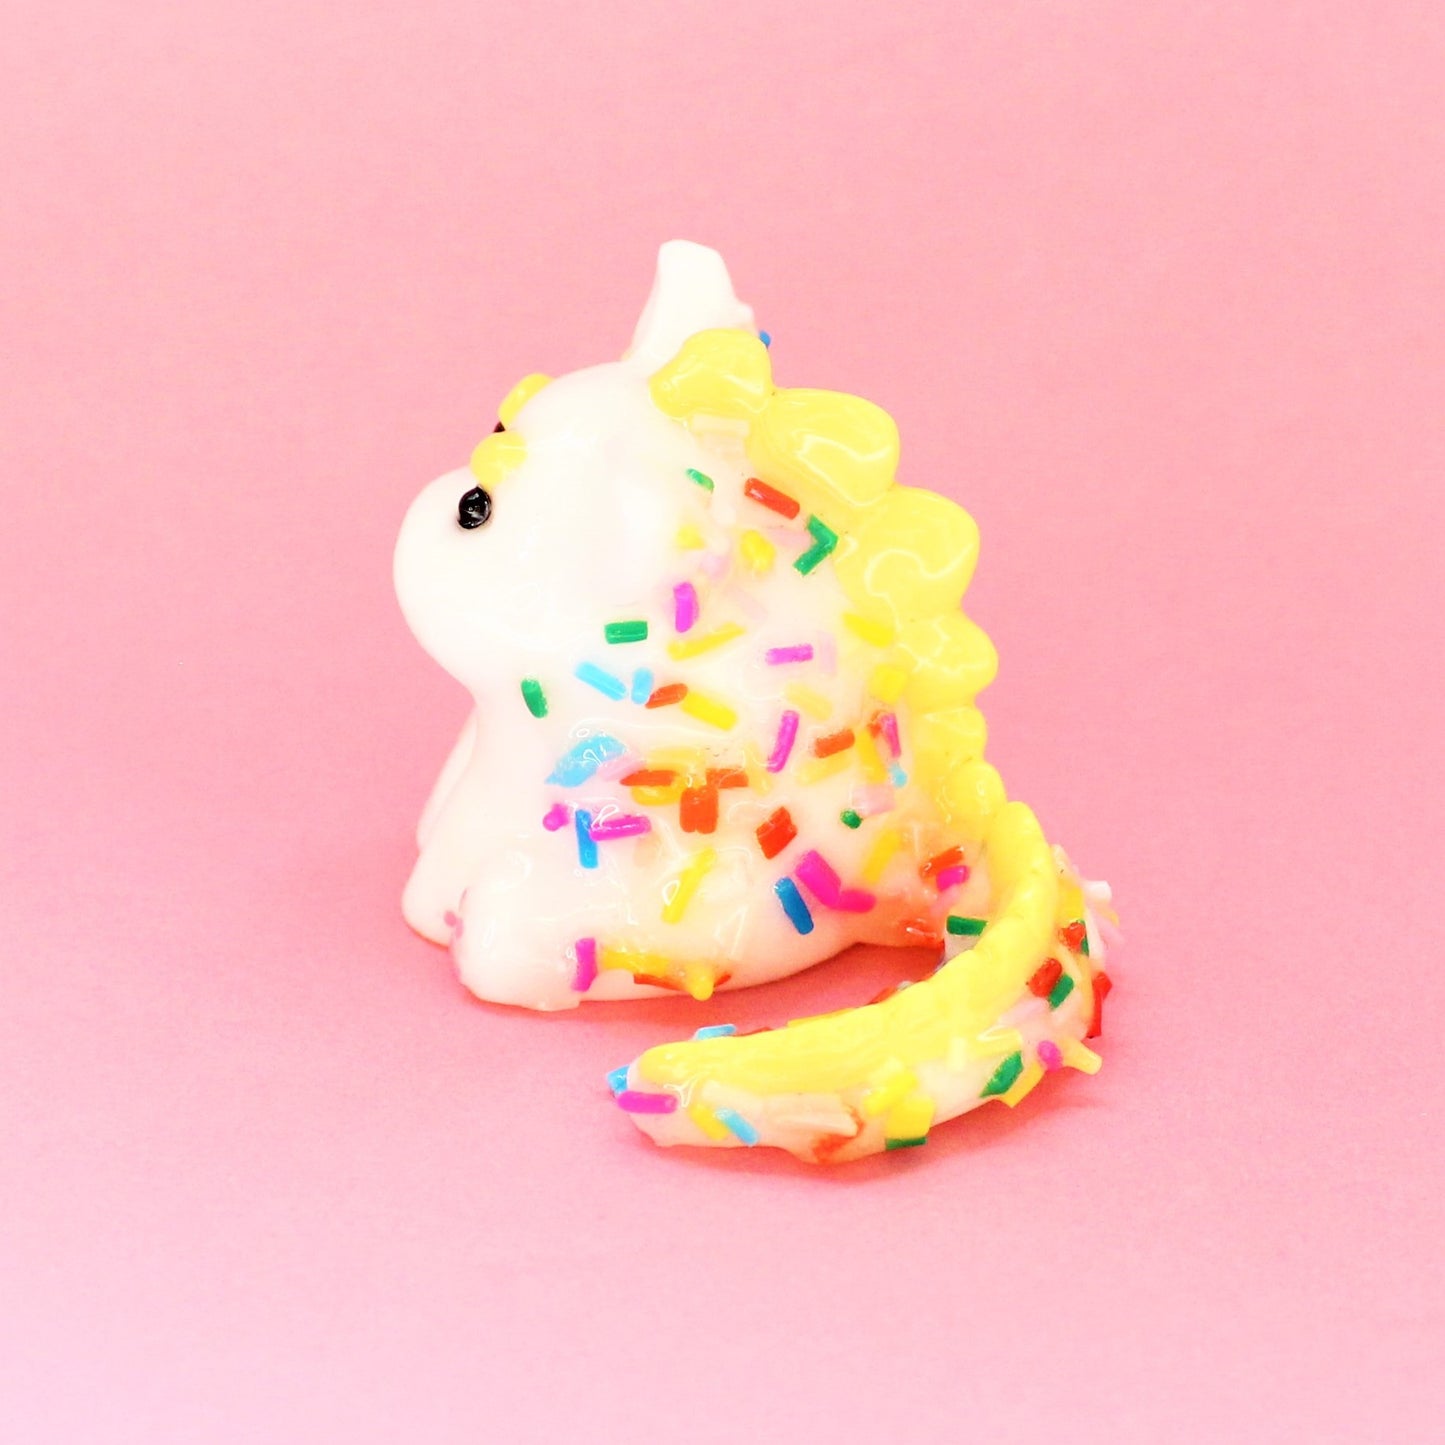 Dinocat Yellow Ice Cream Sprinkle Figure / Handmade Resin Art Toy Mini Fig / Adorable Cat Dinosaur / Desk Decoration Collectable / Chibi